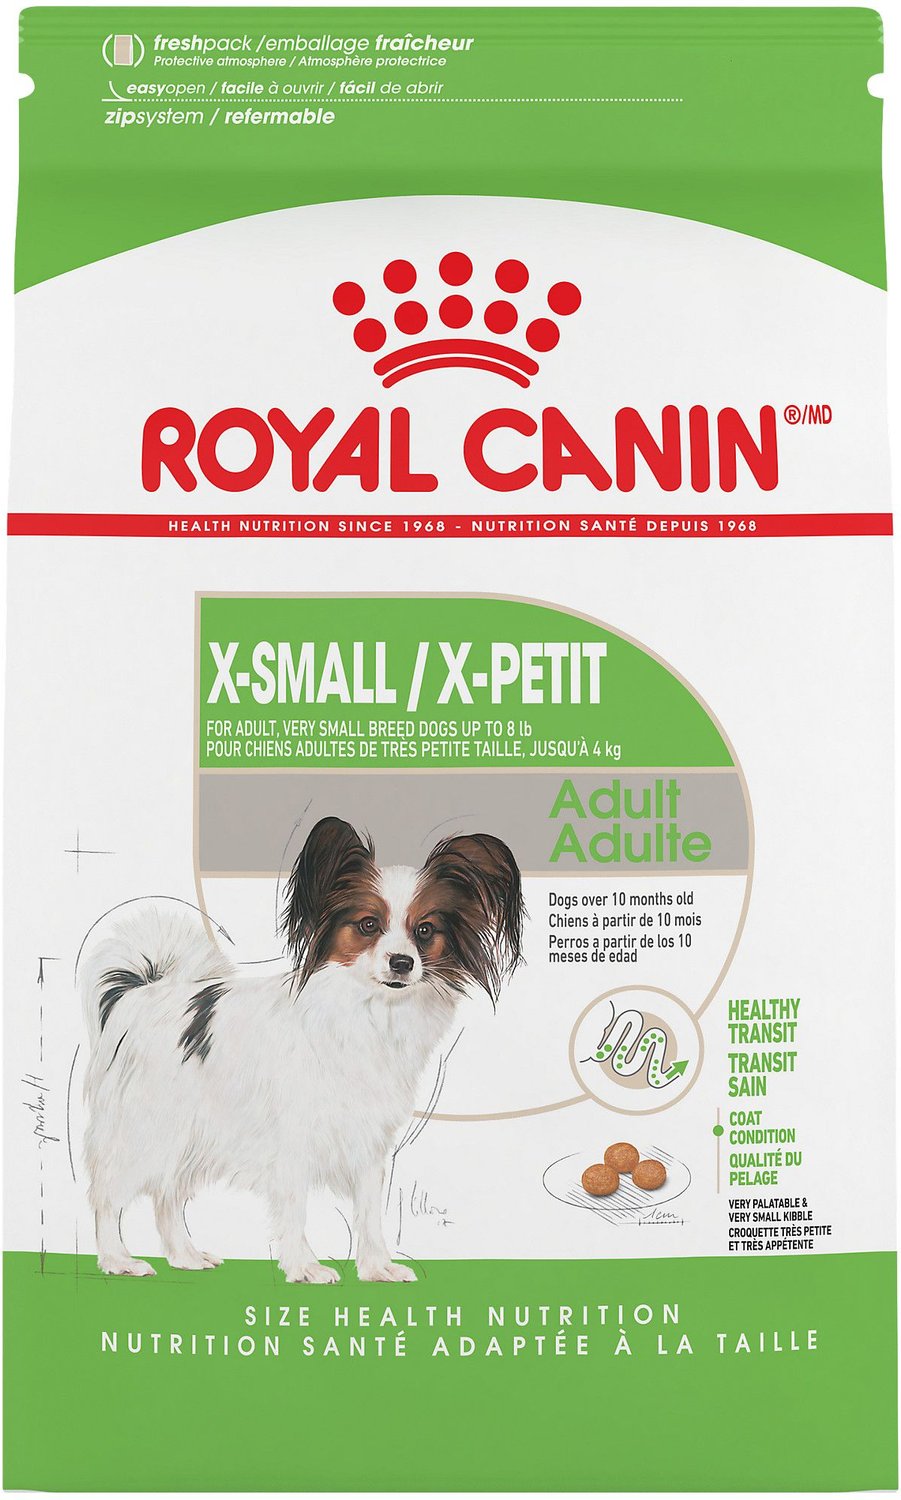 Royal Canin X-Small